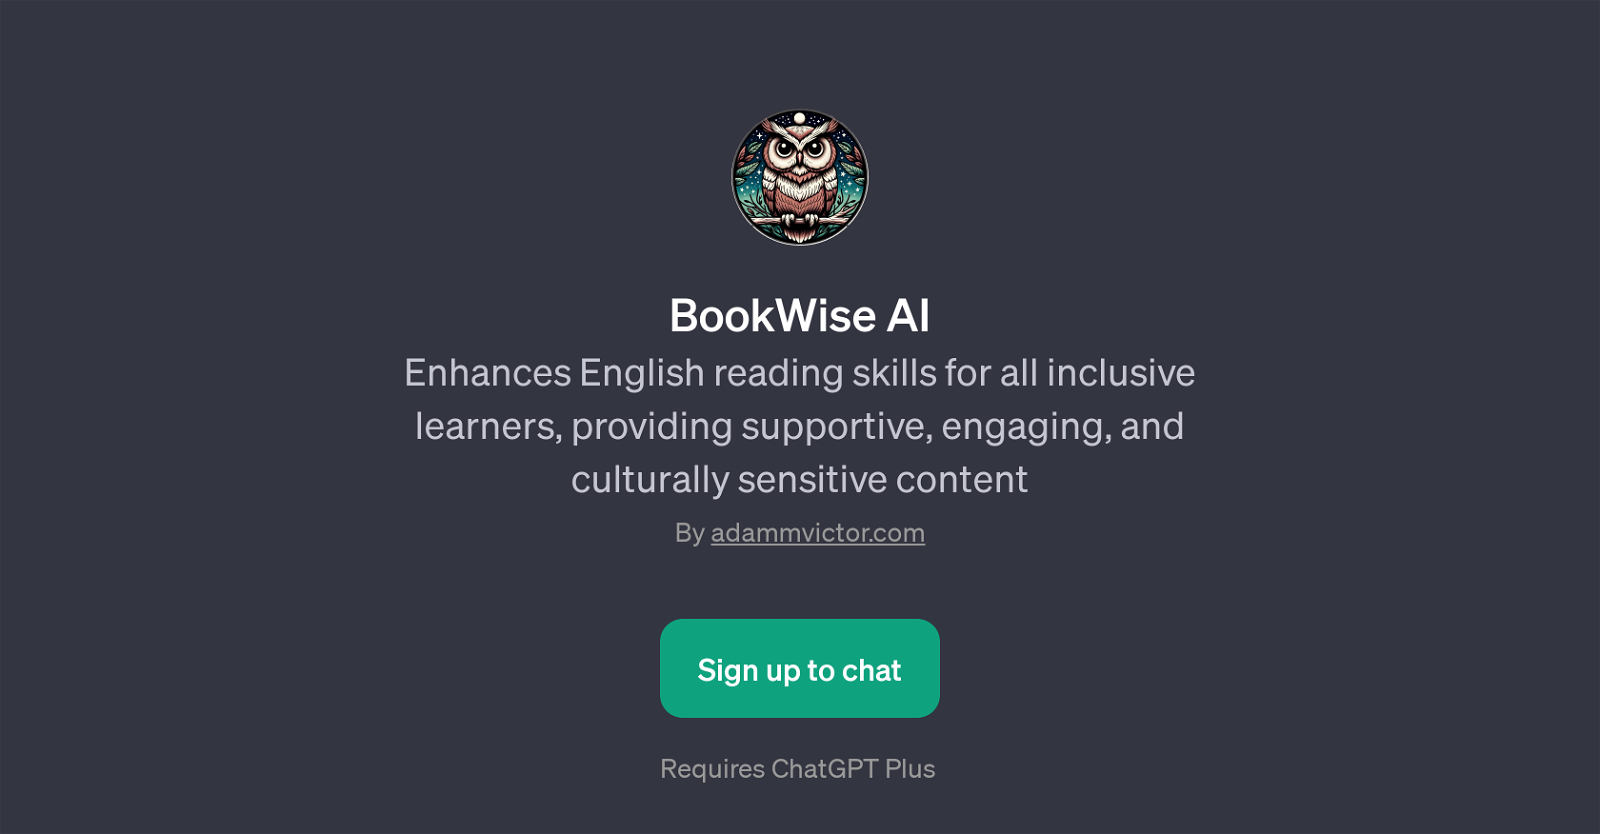 BookWise AI website